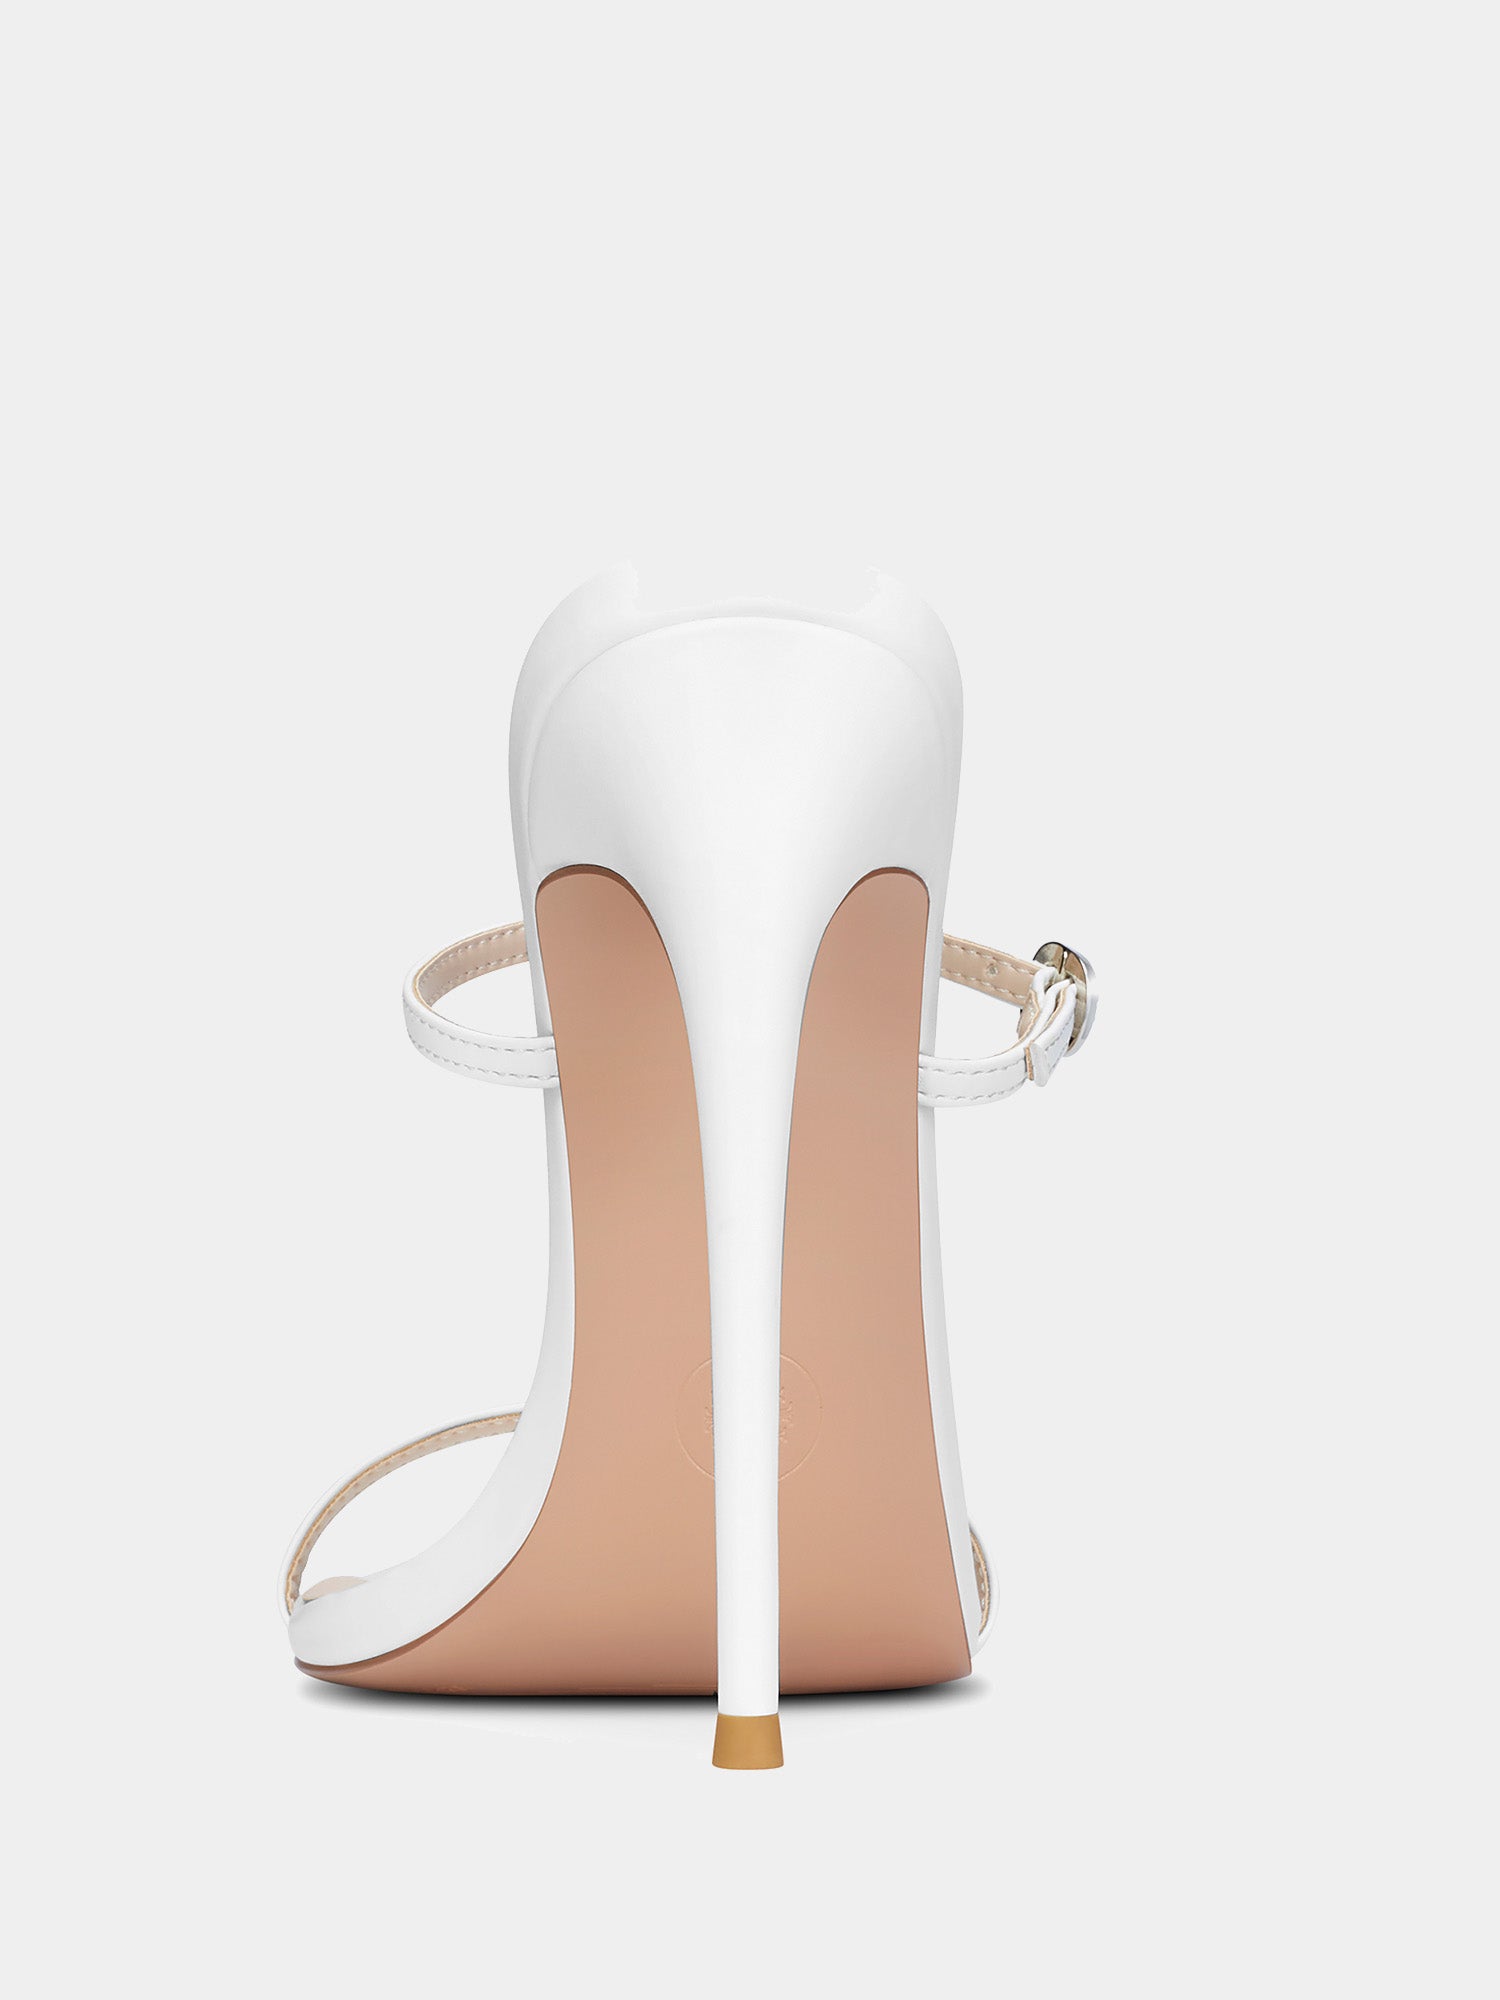 Miami 100 Sandal - White | Femme LA